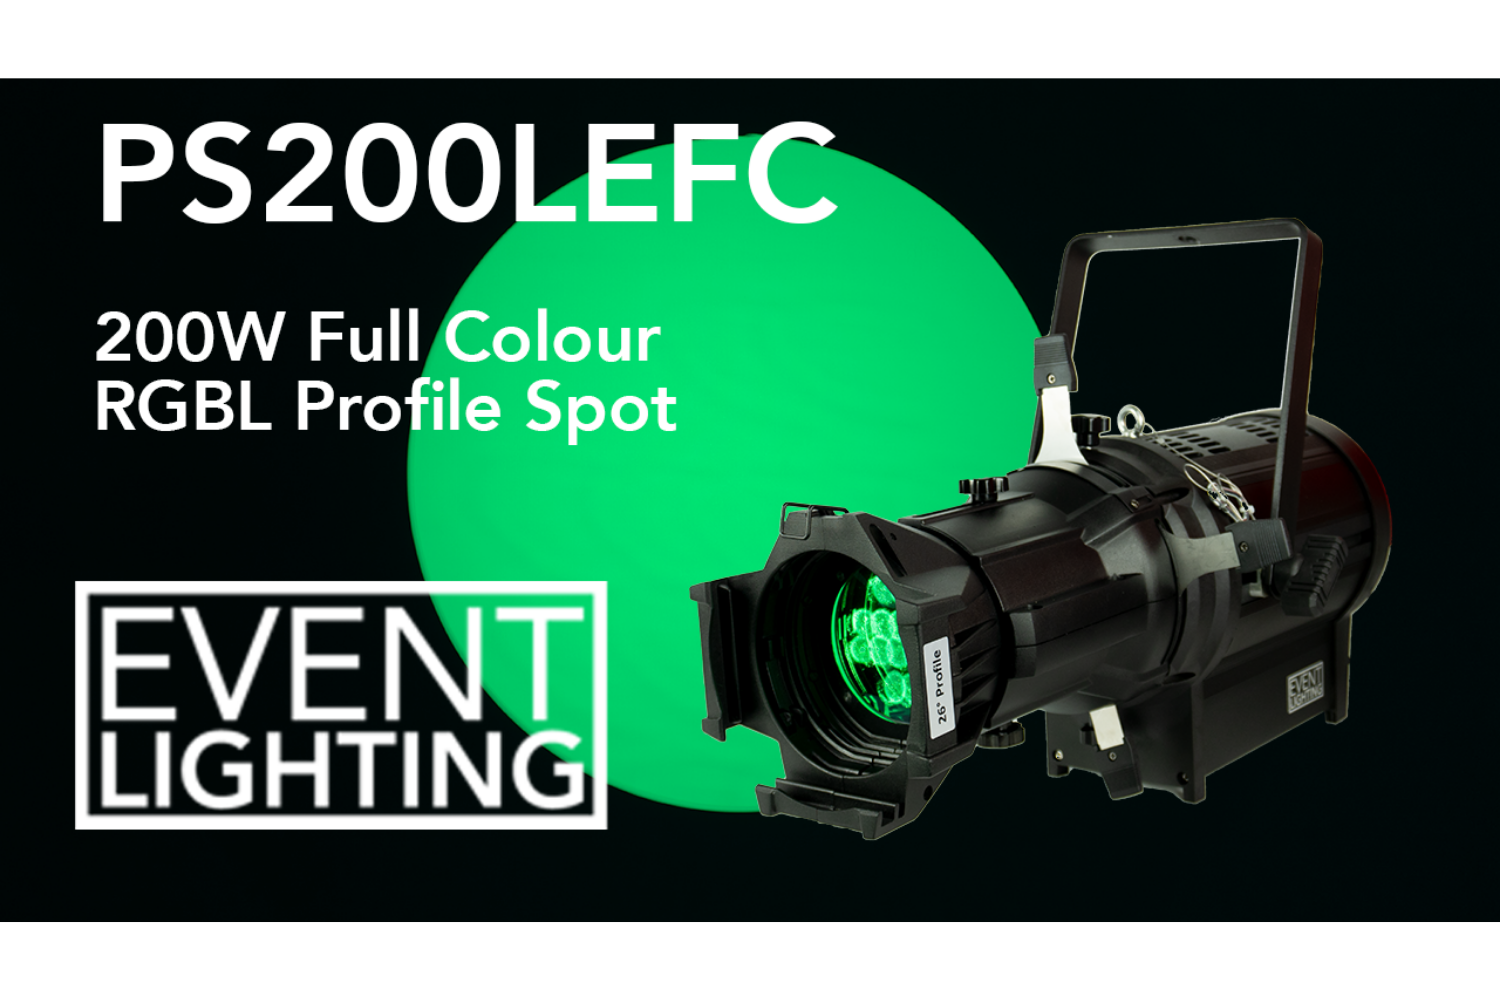 Event Lighting PS200LEFC Full Colour RGBL Profile Spot